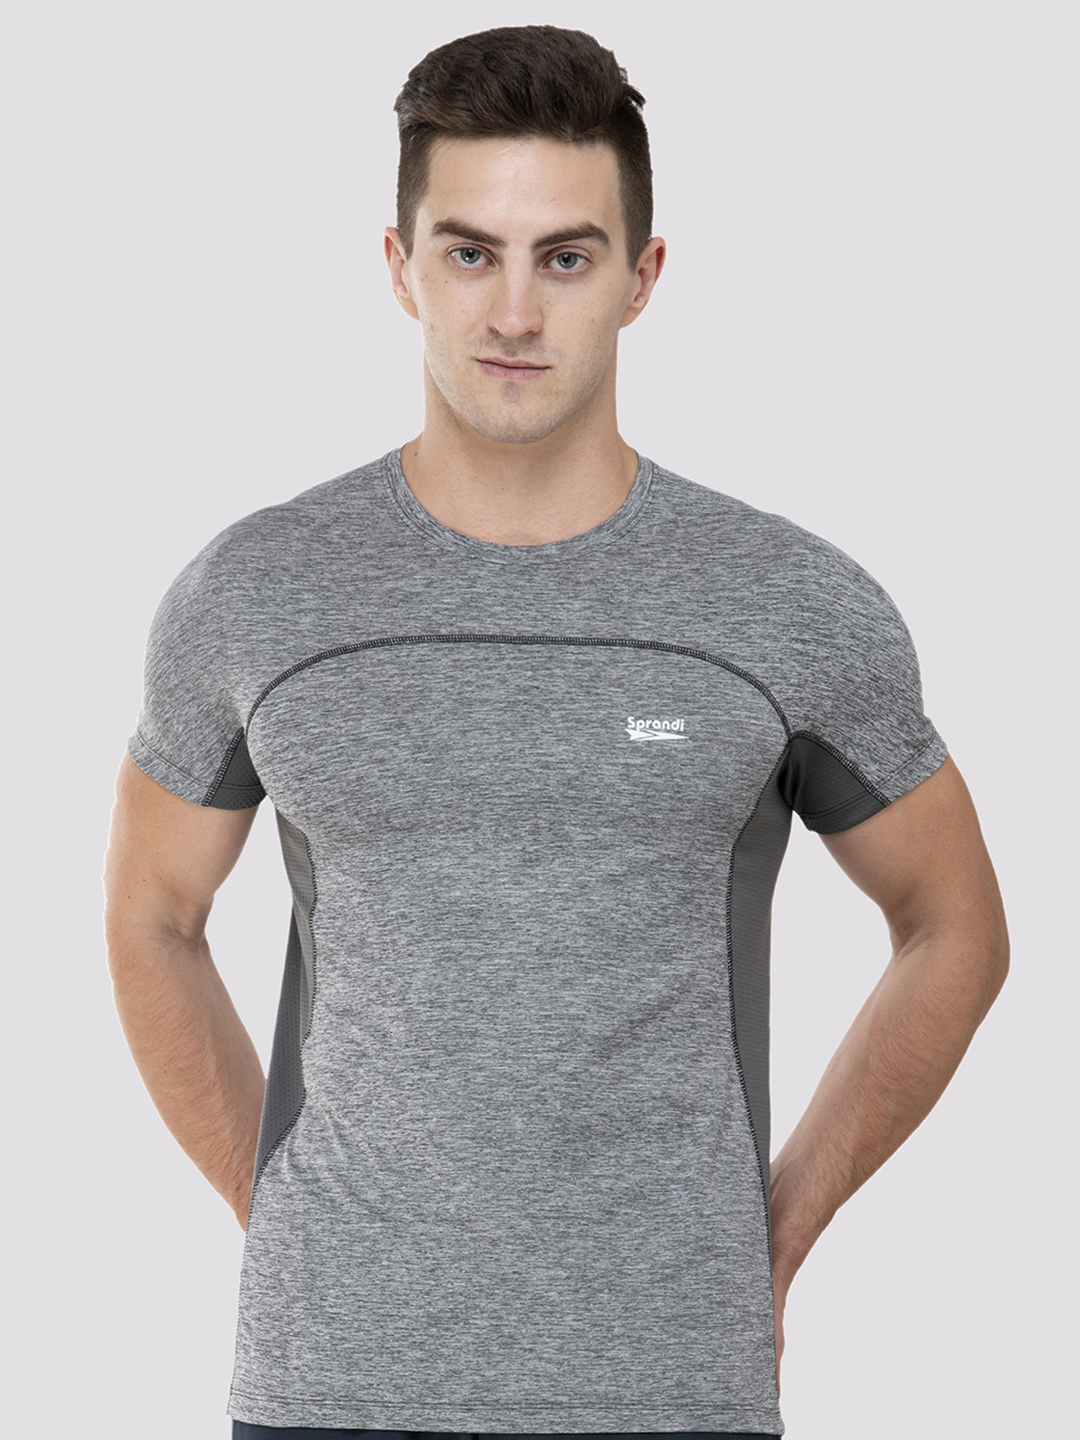 Buy Sprandi Men's Black Half Sleeve T-Shirts Online @ ₹500 from ShopClues